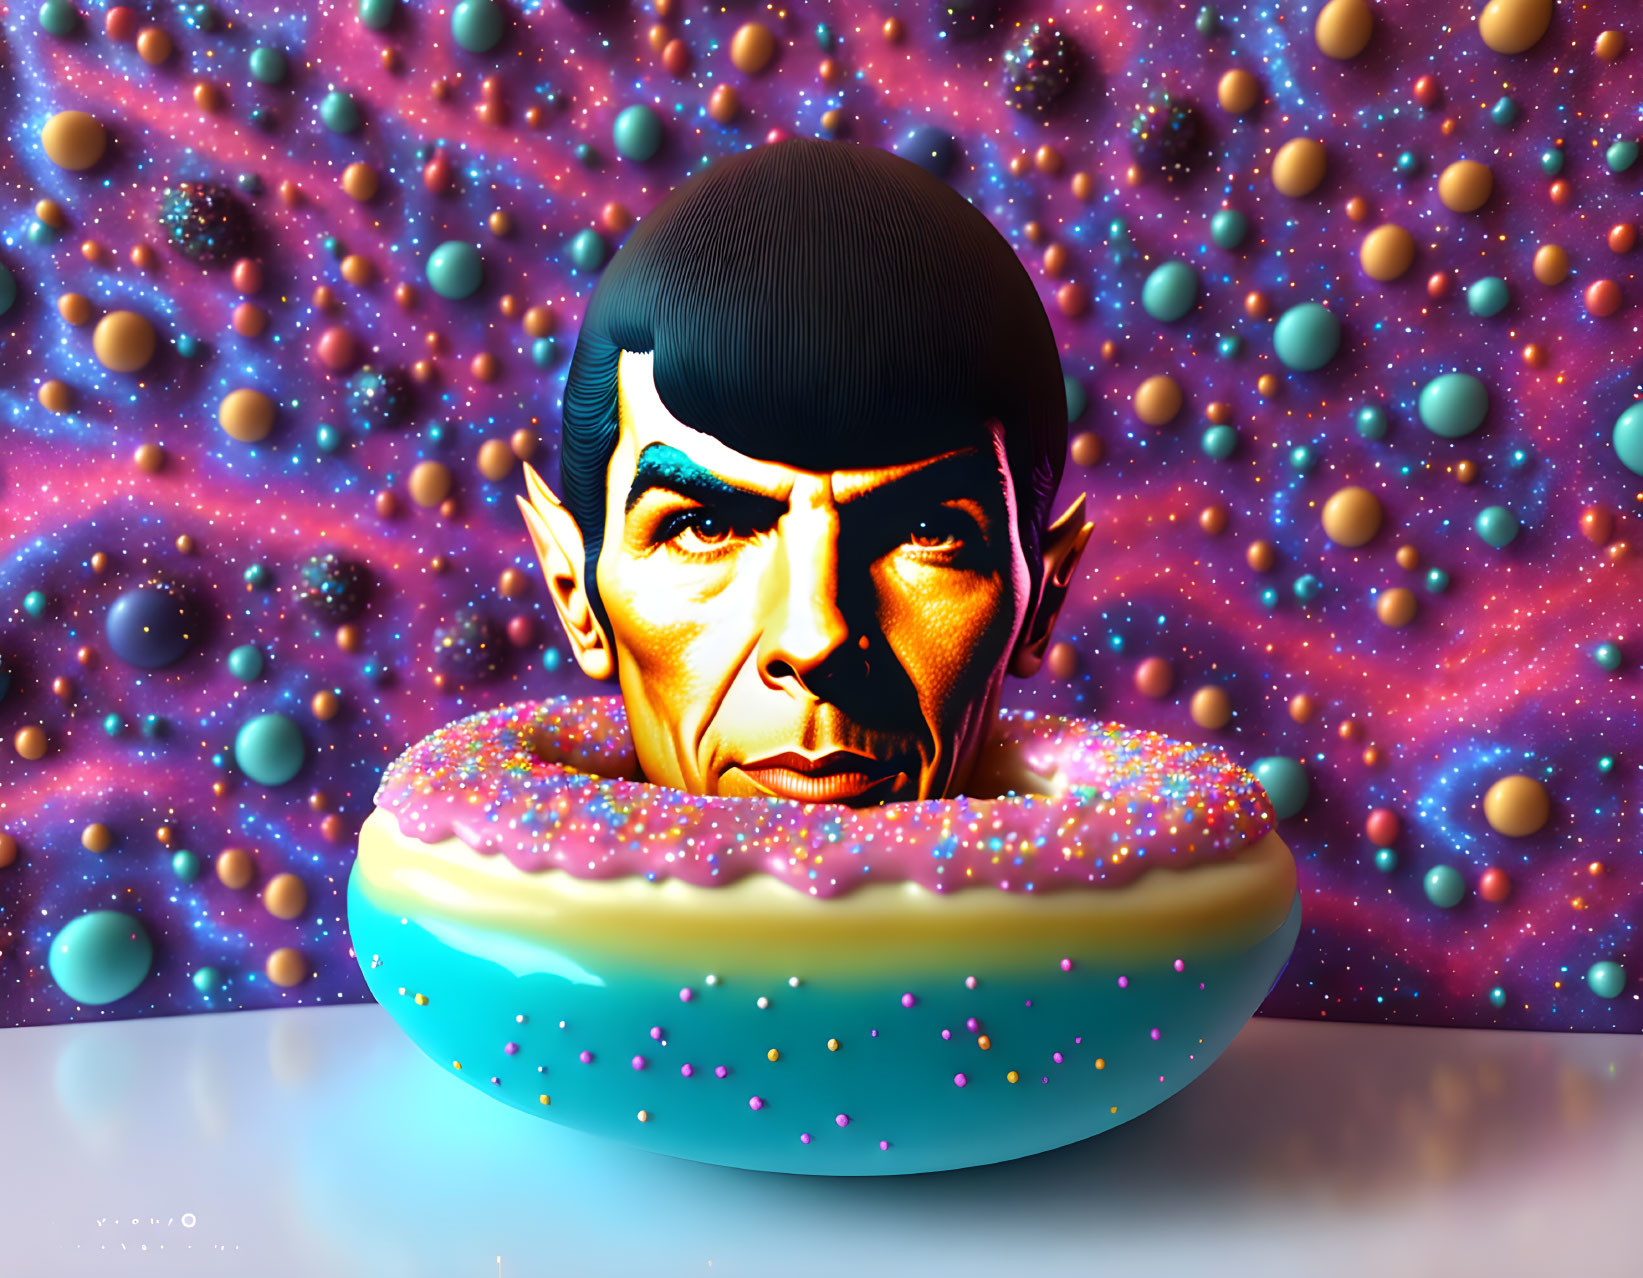 Spock has entered the enterprise. 